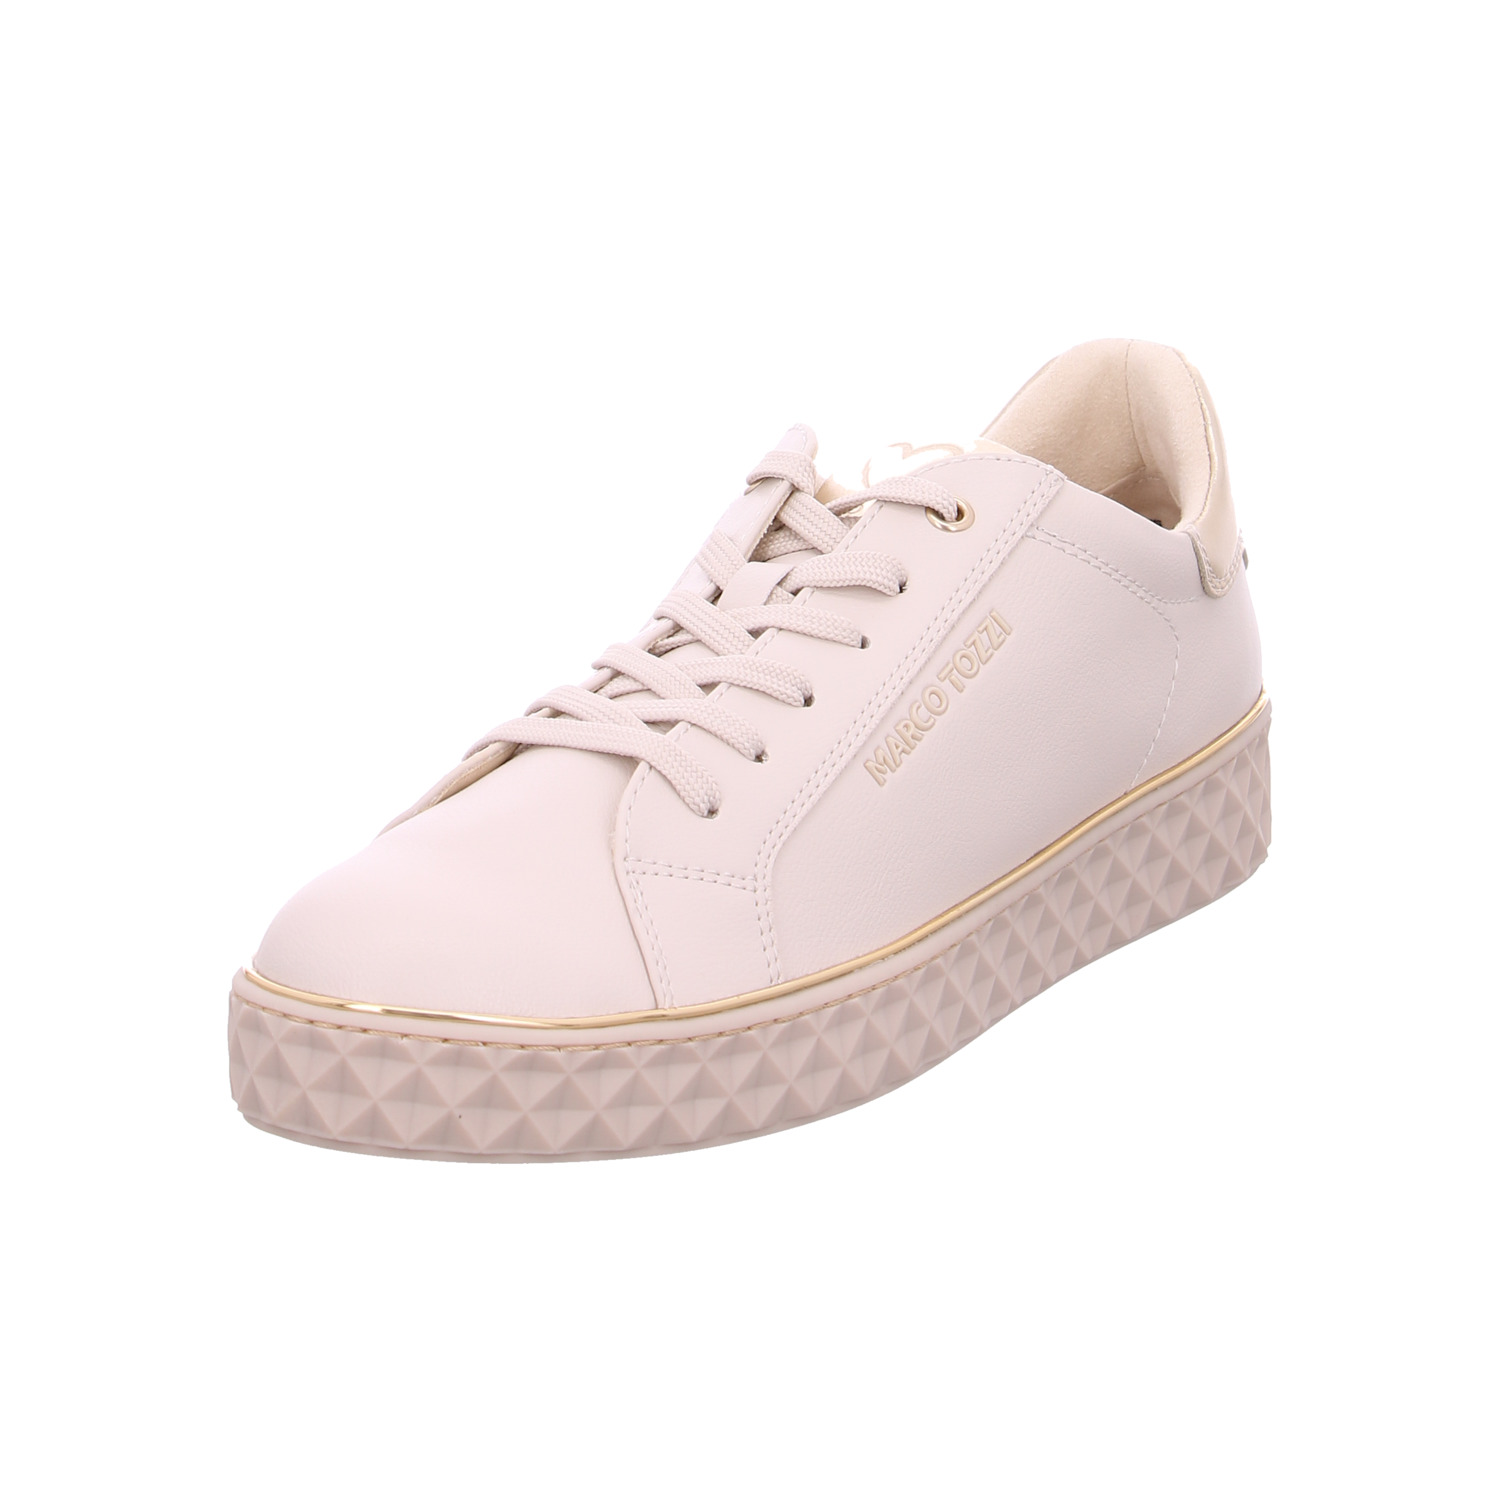 marco-tozzi-sneaker-weiß-119891-1